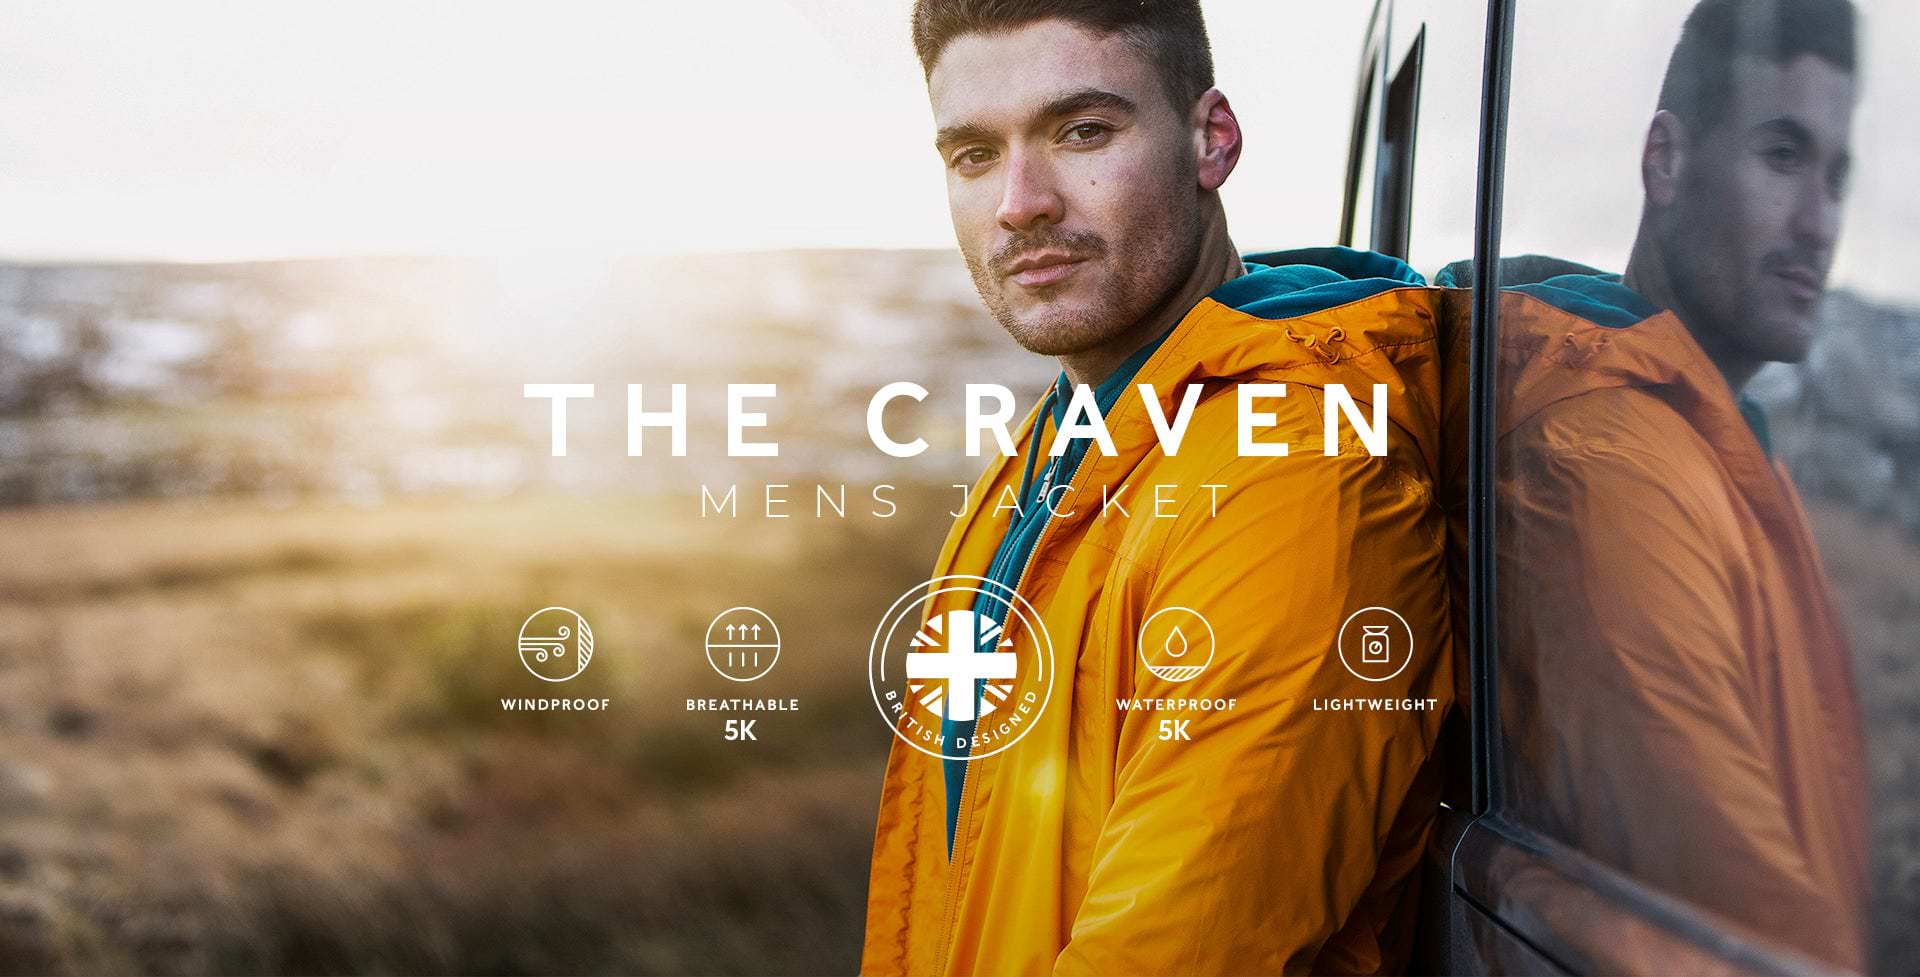 The Craven Mens Jacket. British designed, windproof, 5K breathable, 5k waterproof, lightweight.